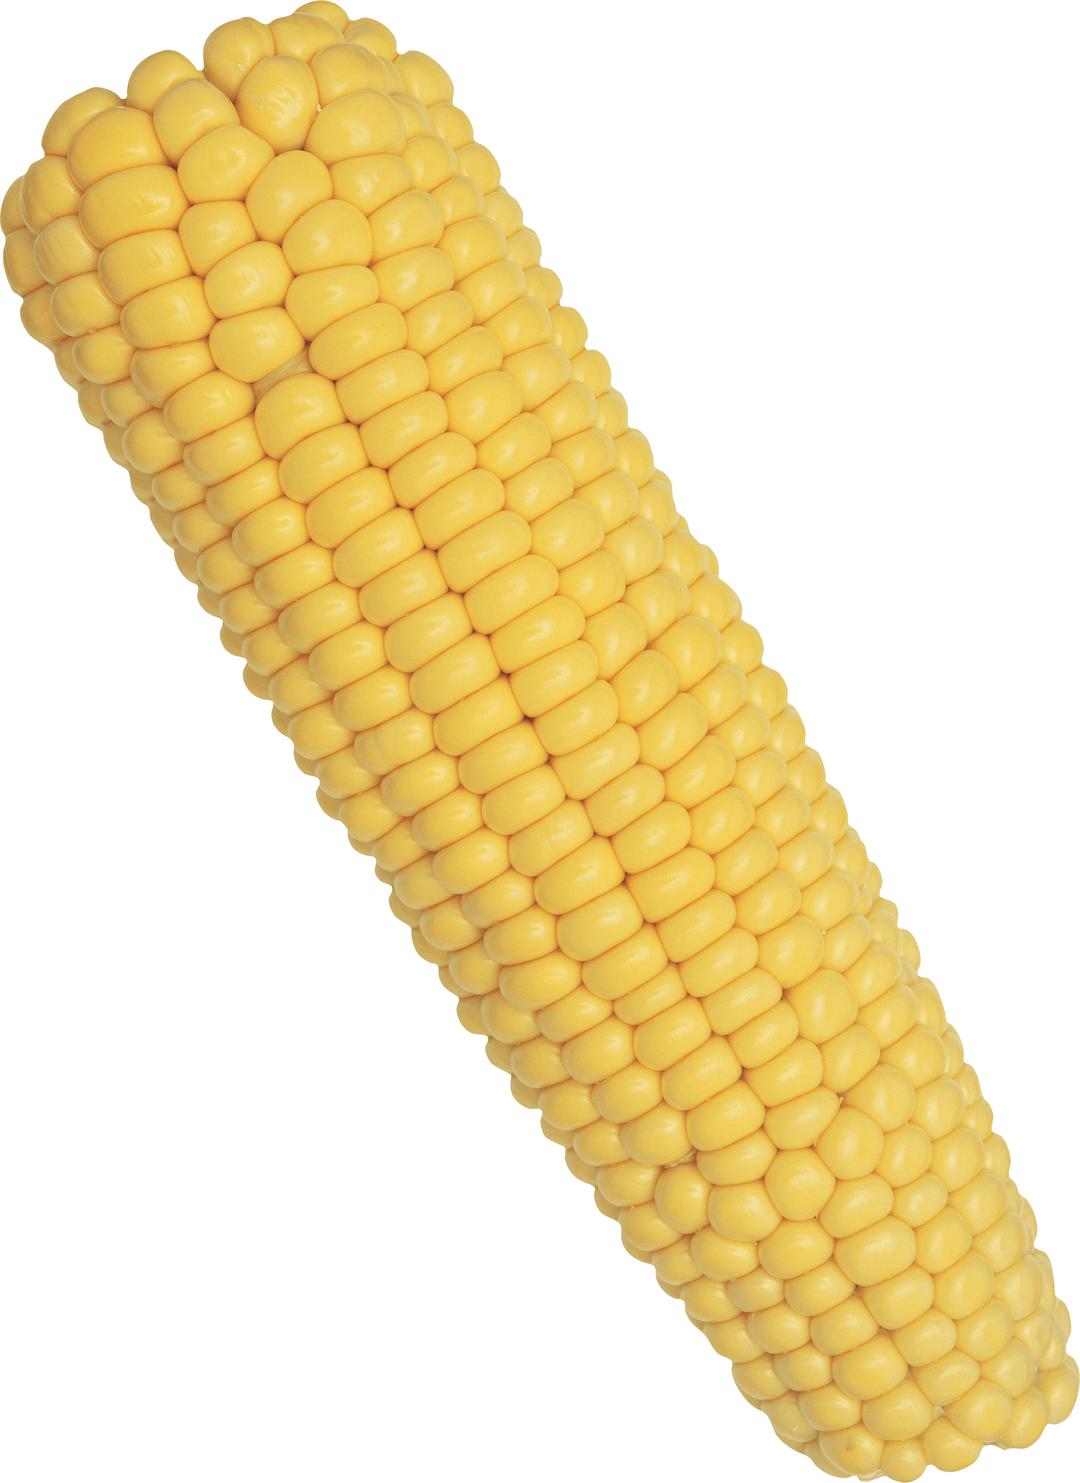 Corn Solo png transparent